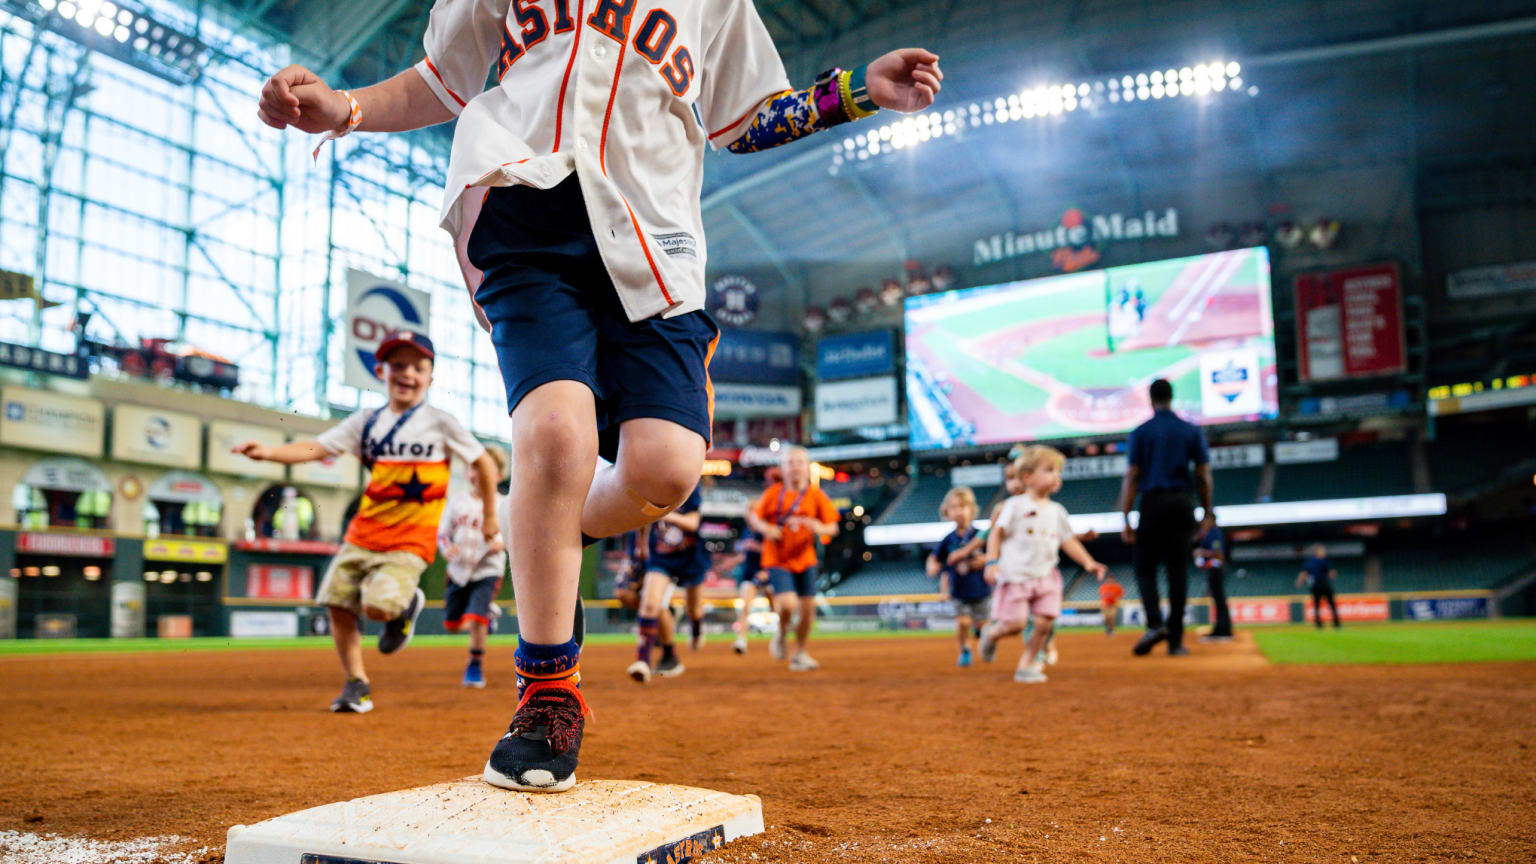 Houston kids participate in Astros baseball clinic · Buckner International